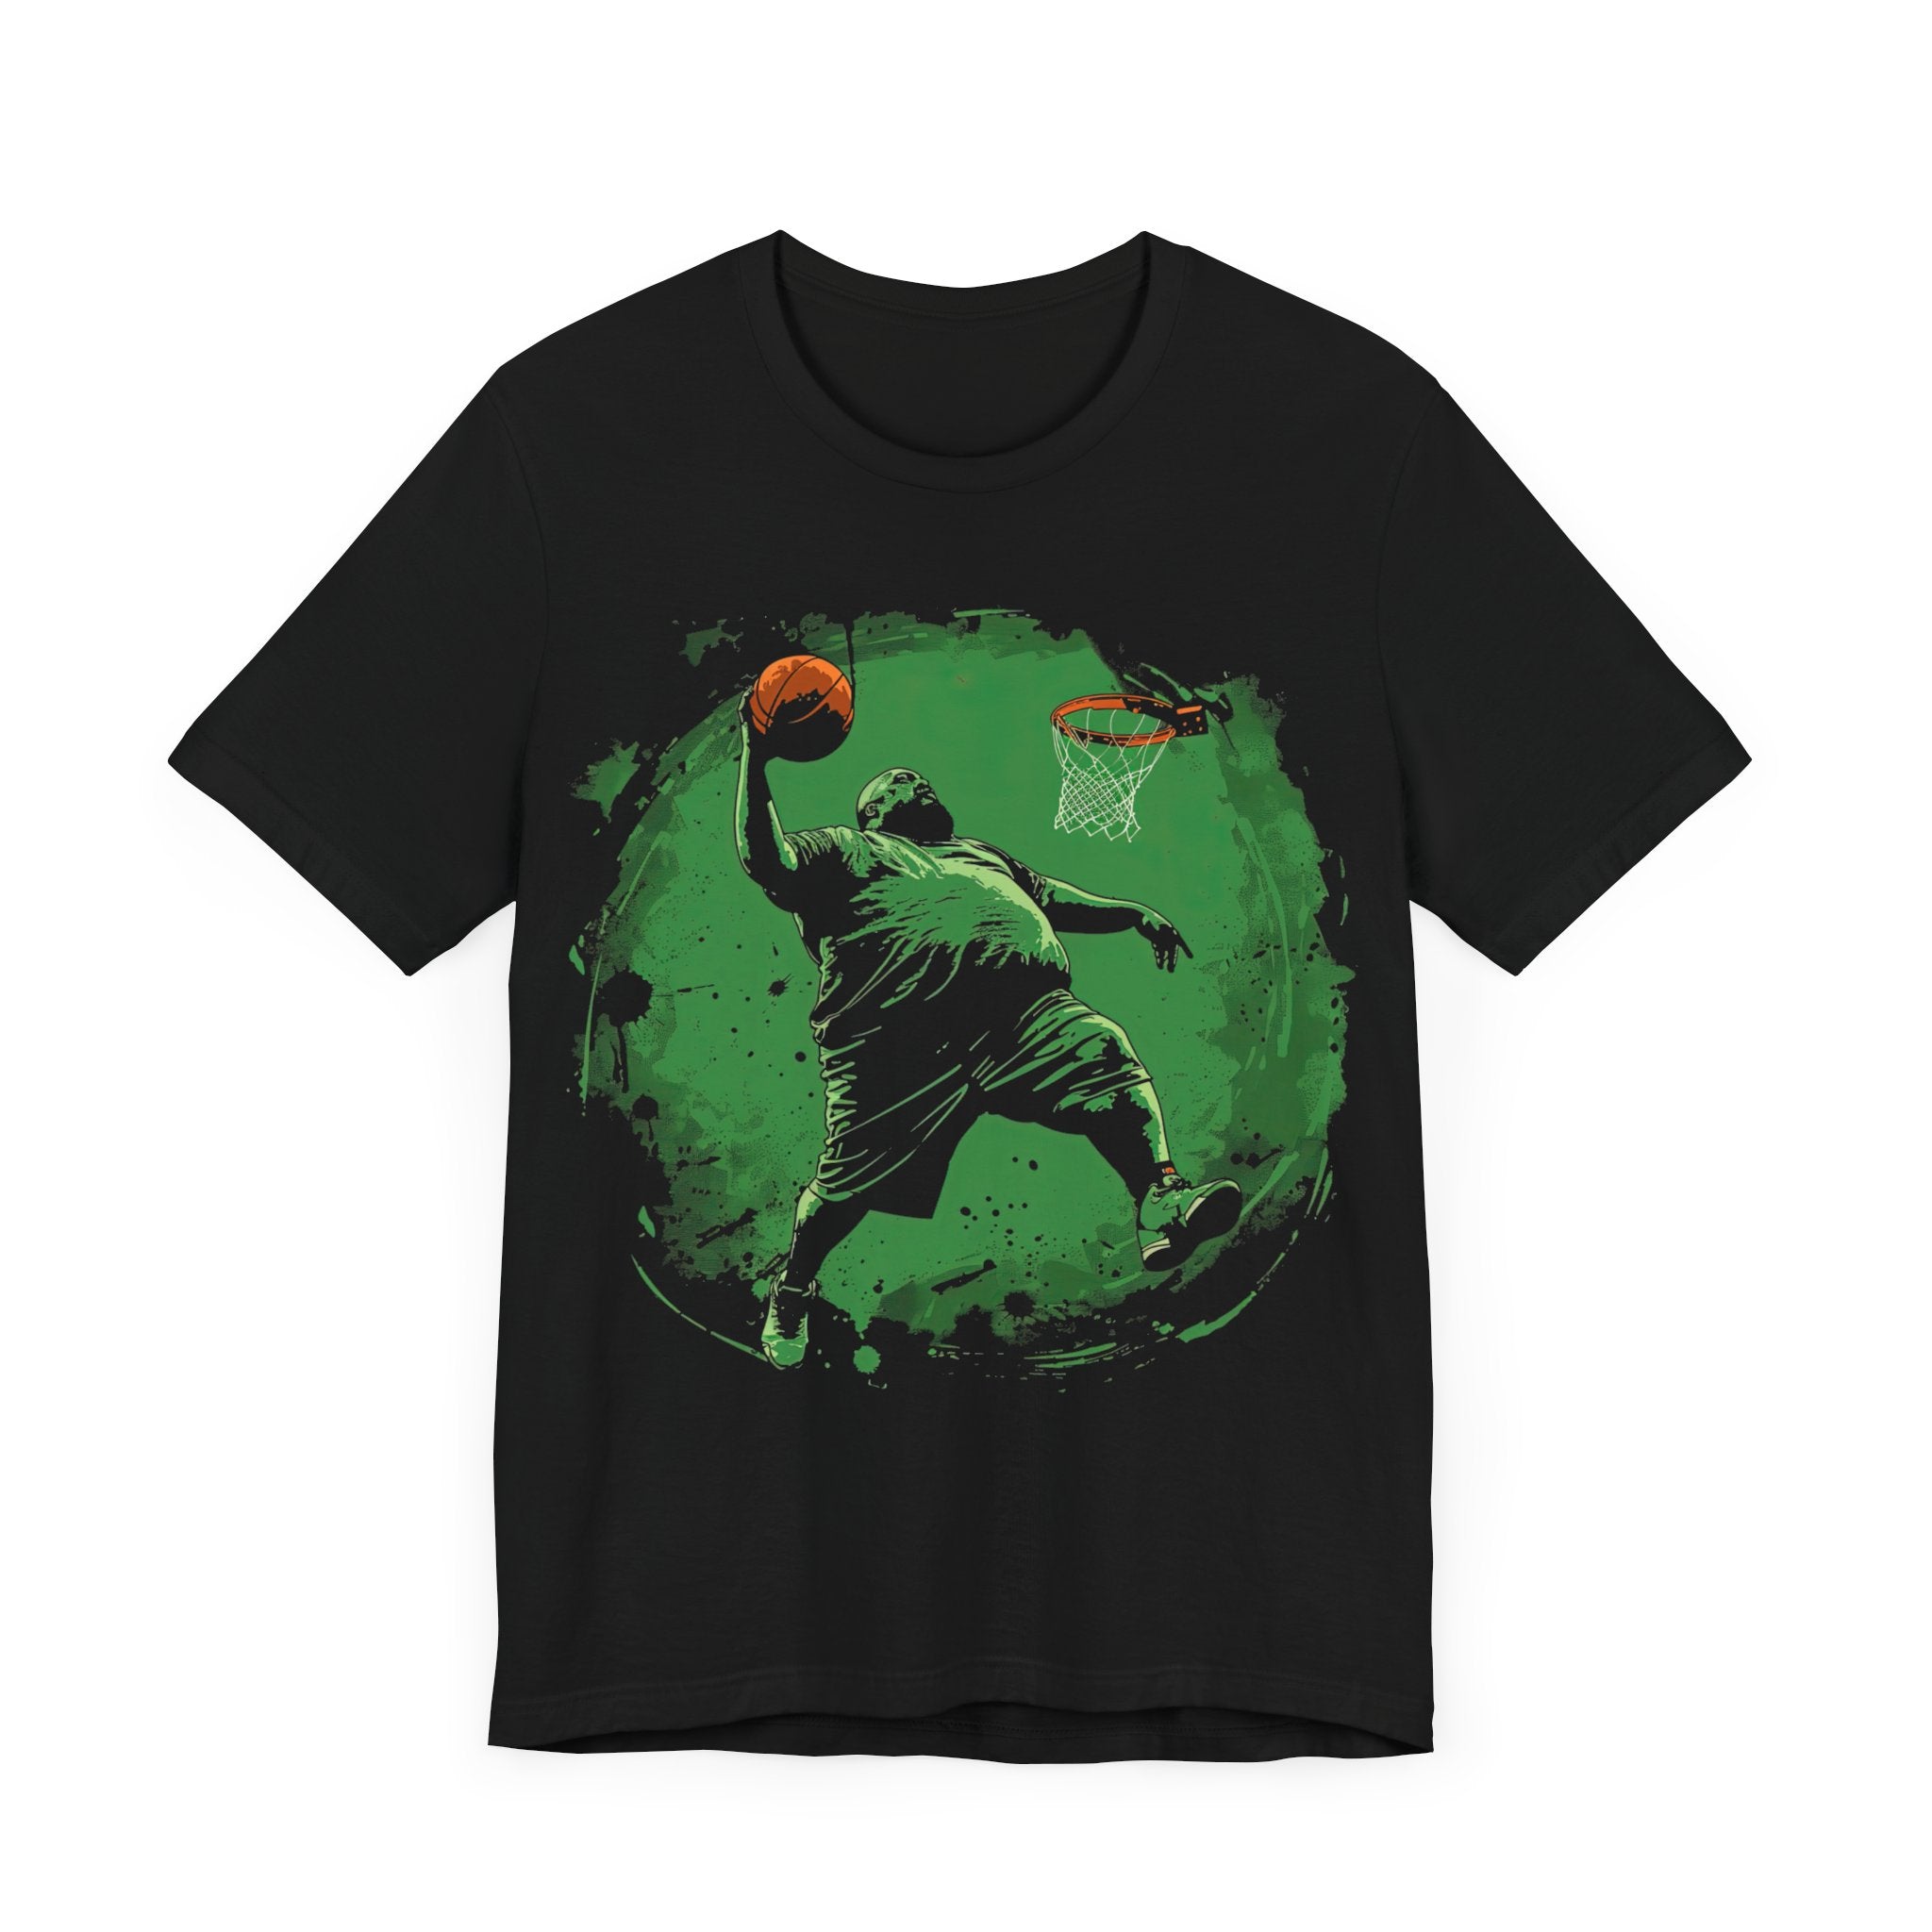 Green FN Slam Dunk T-Shirt, Ironic Perfect Shot Graphic Tee, Viral Meme-Inspired Sports Apparel, Eye-Catching Green Splash Design